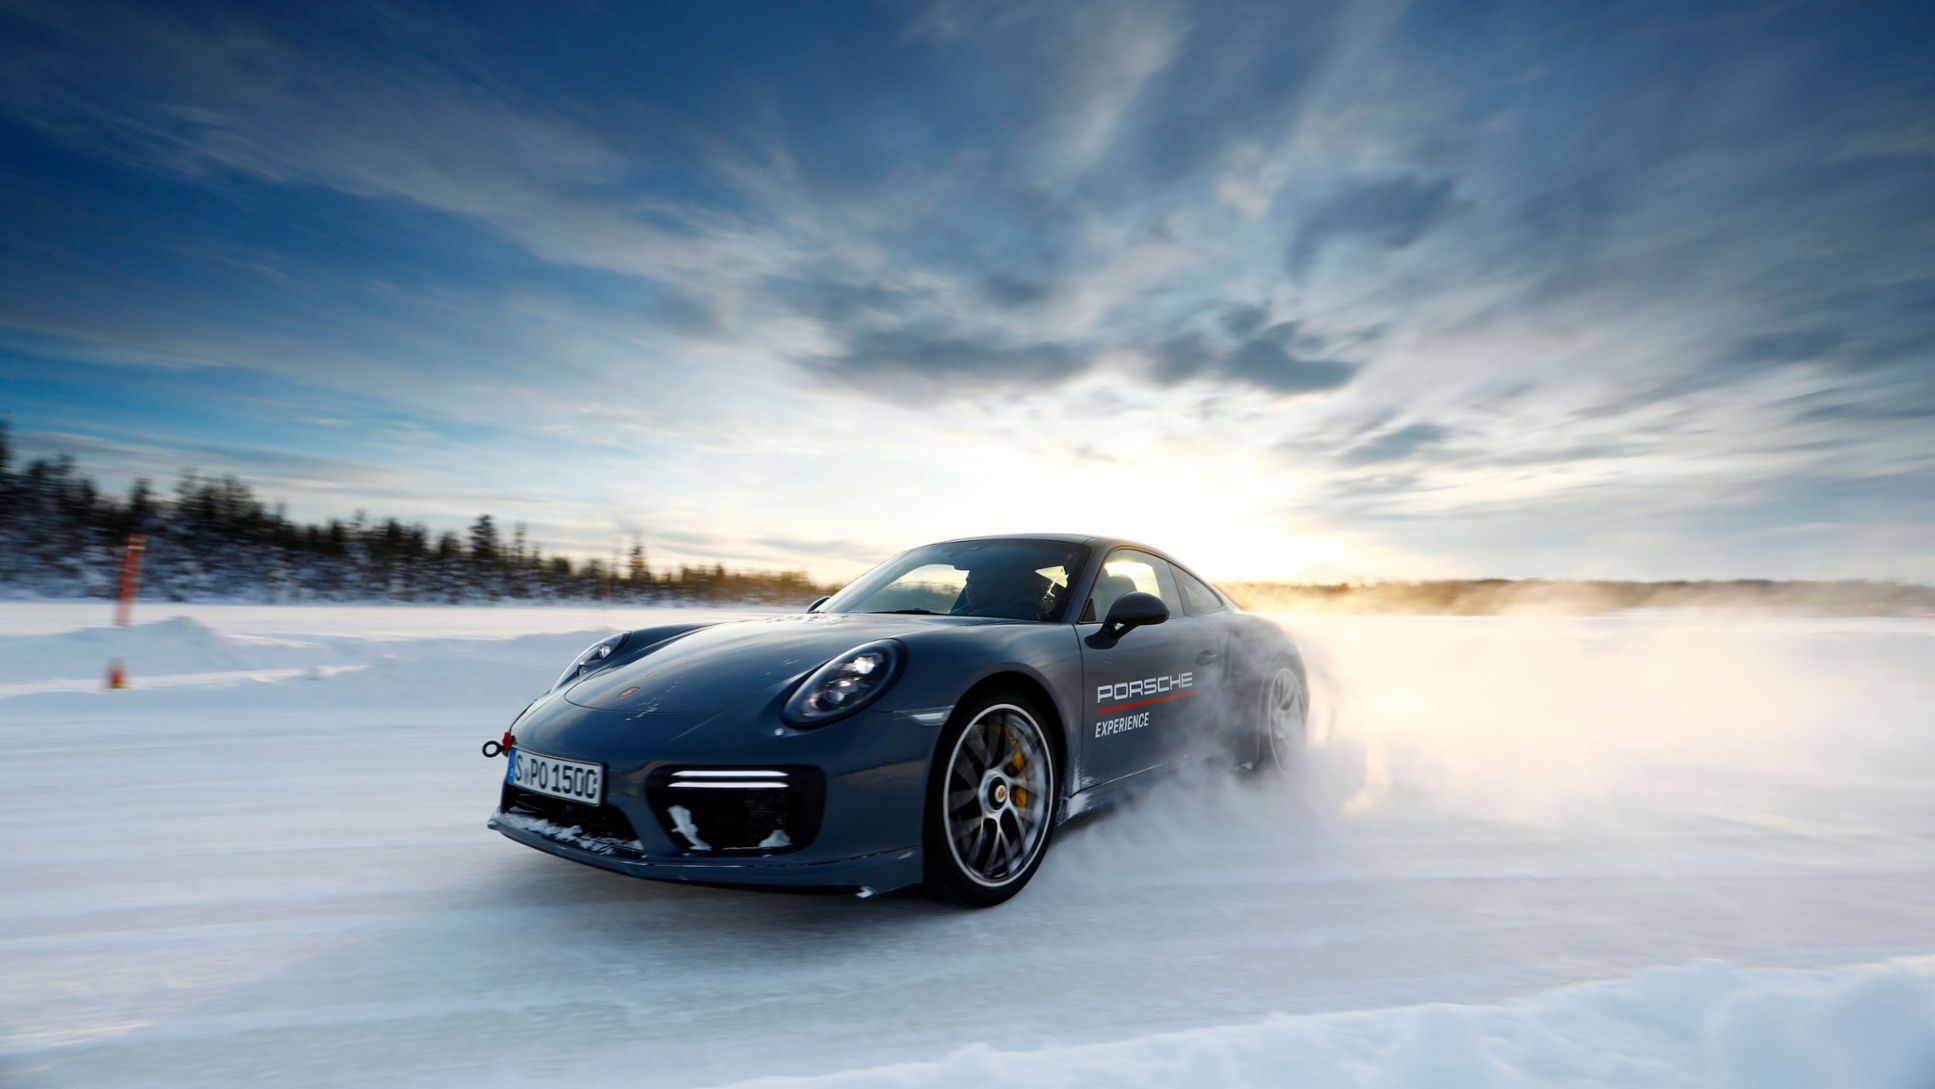 911 Turbo S, Porsche Ice Experience, Levi, Finnland, 2018, Porsche AG